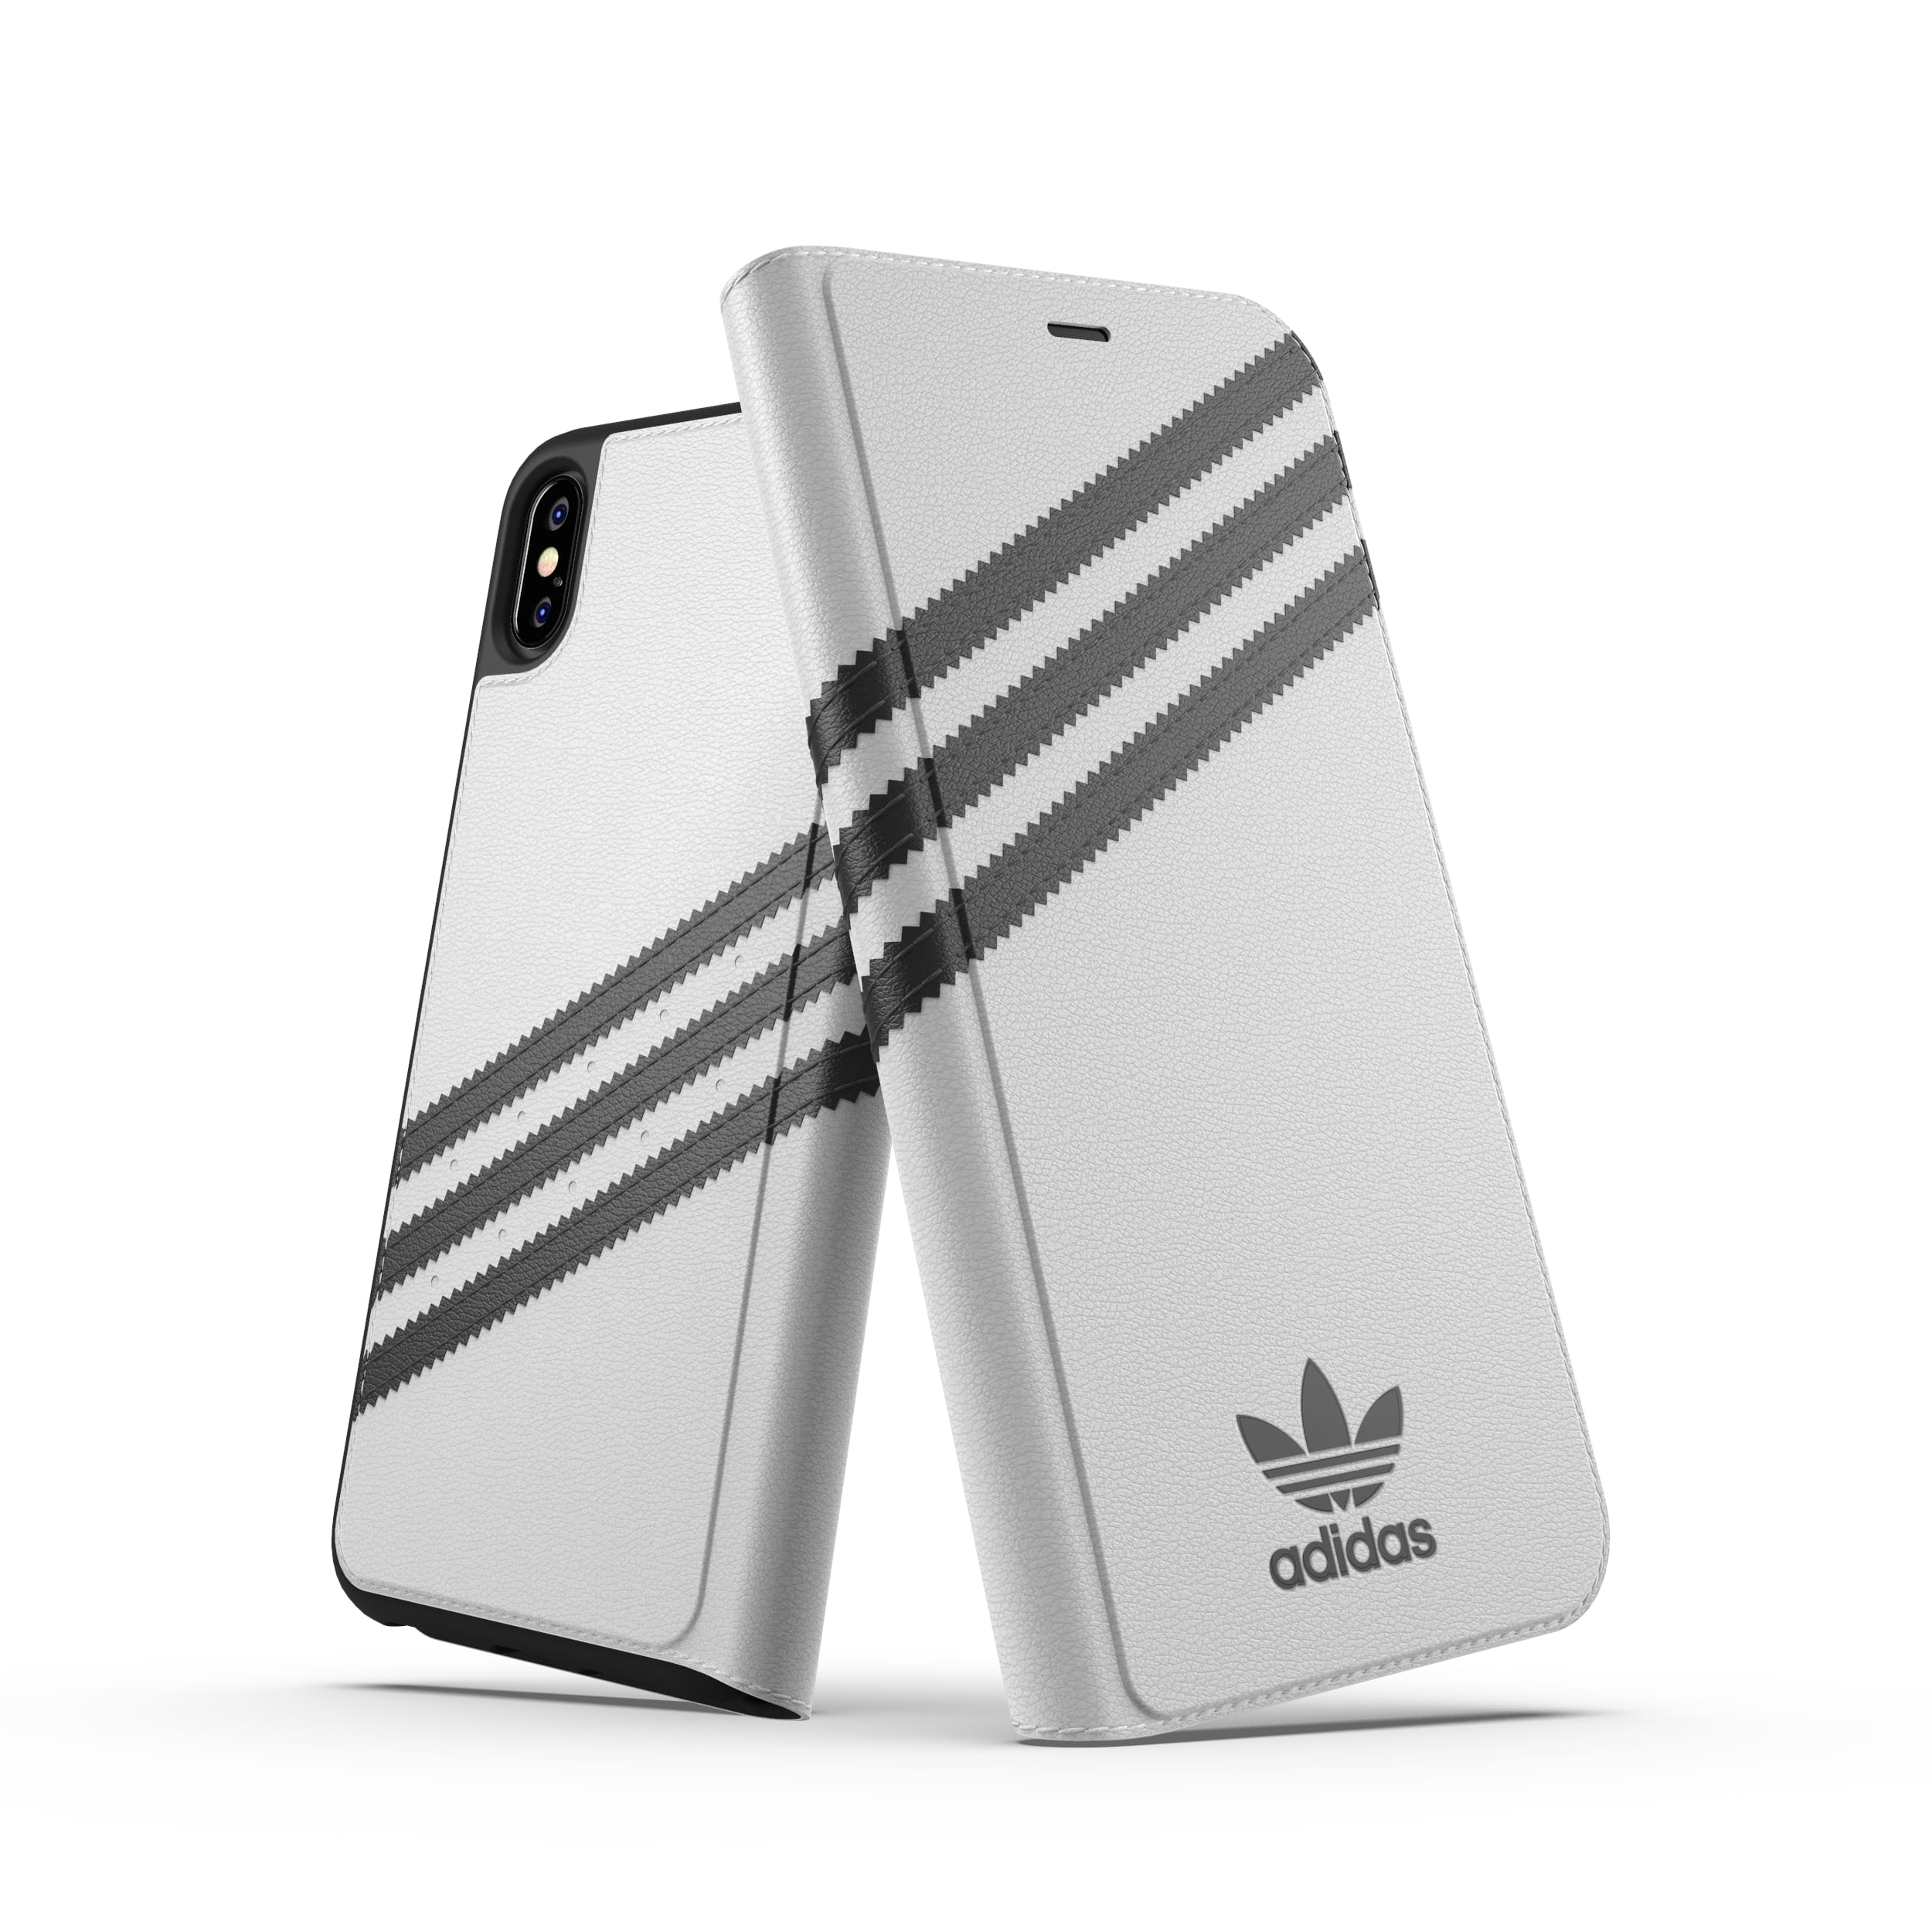 adidas アディダス スマホケース iPhone XS Max 手帳型ケース アイフォン 手帳 ケース カバー スマホケース 耐衝撃 TPU SAMBA サンバ ホワイト 白 当店限定1年保証 